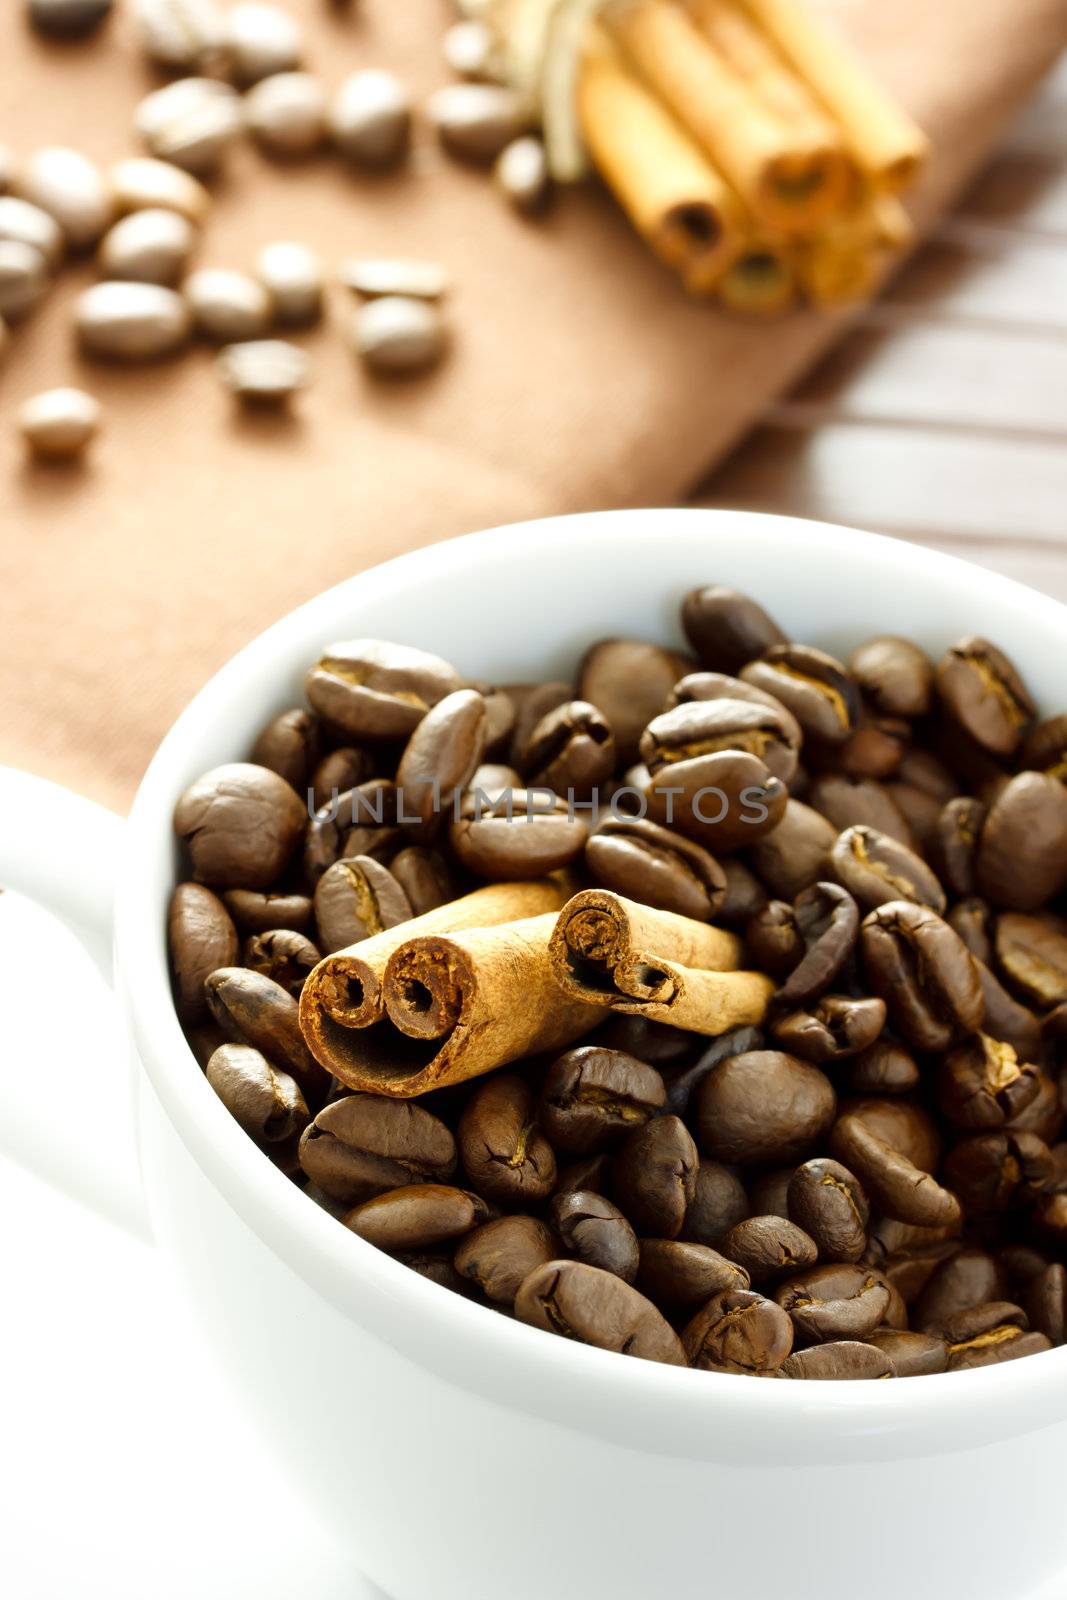 Coffee beans and Cinnamon Sticks by melpomene